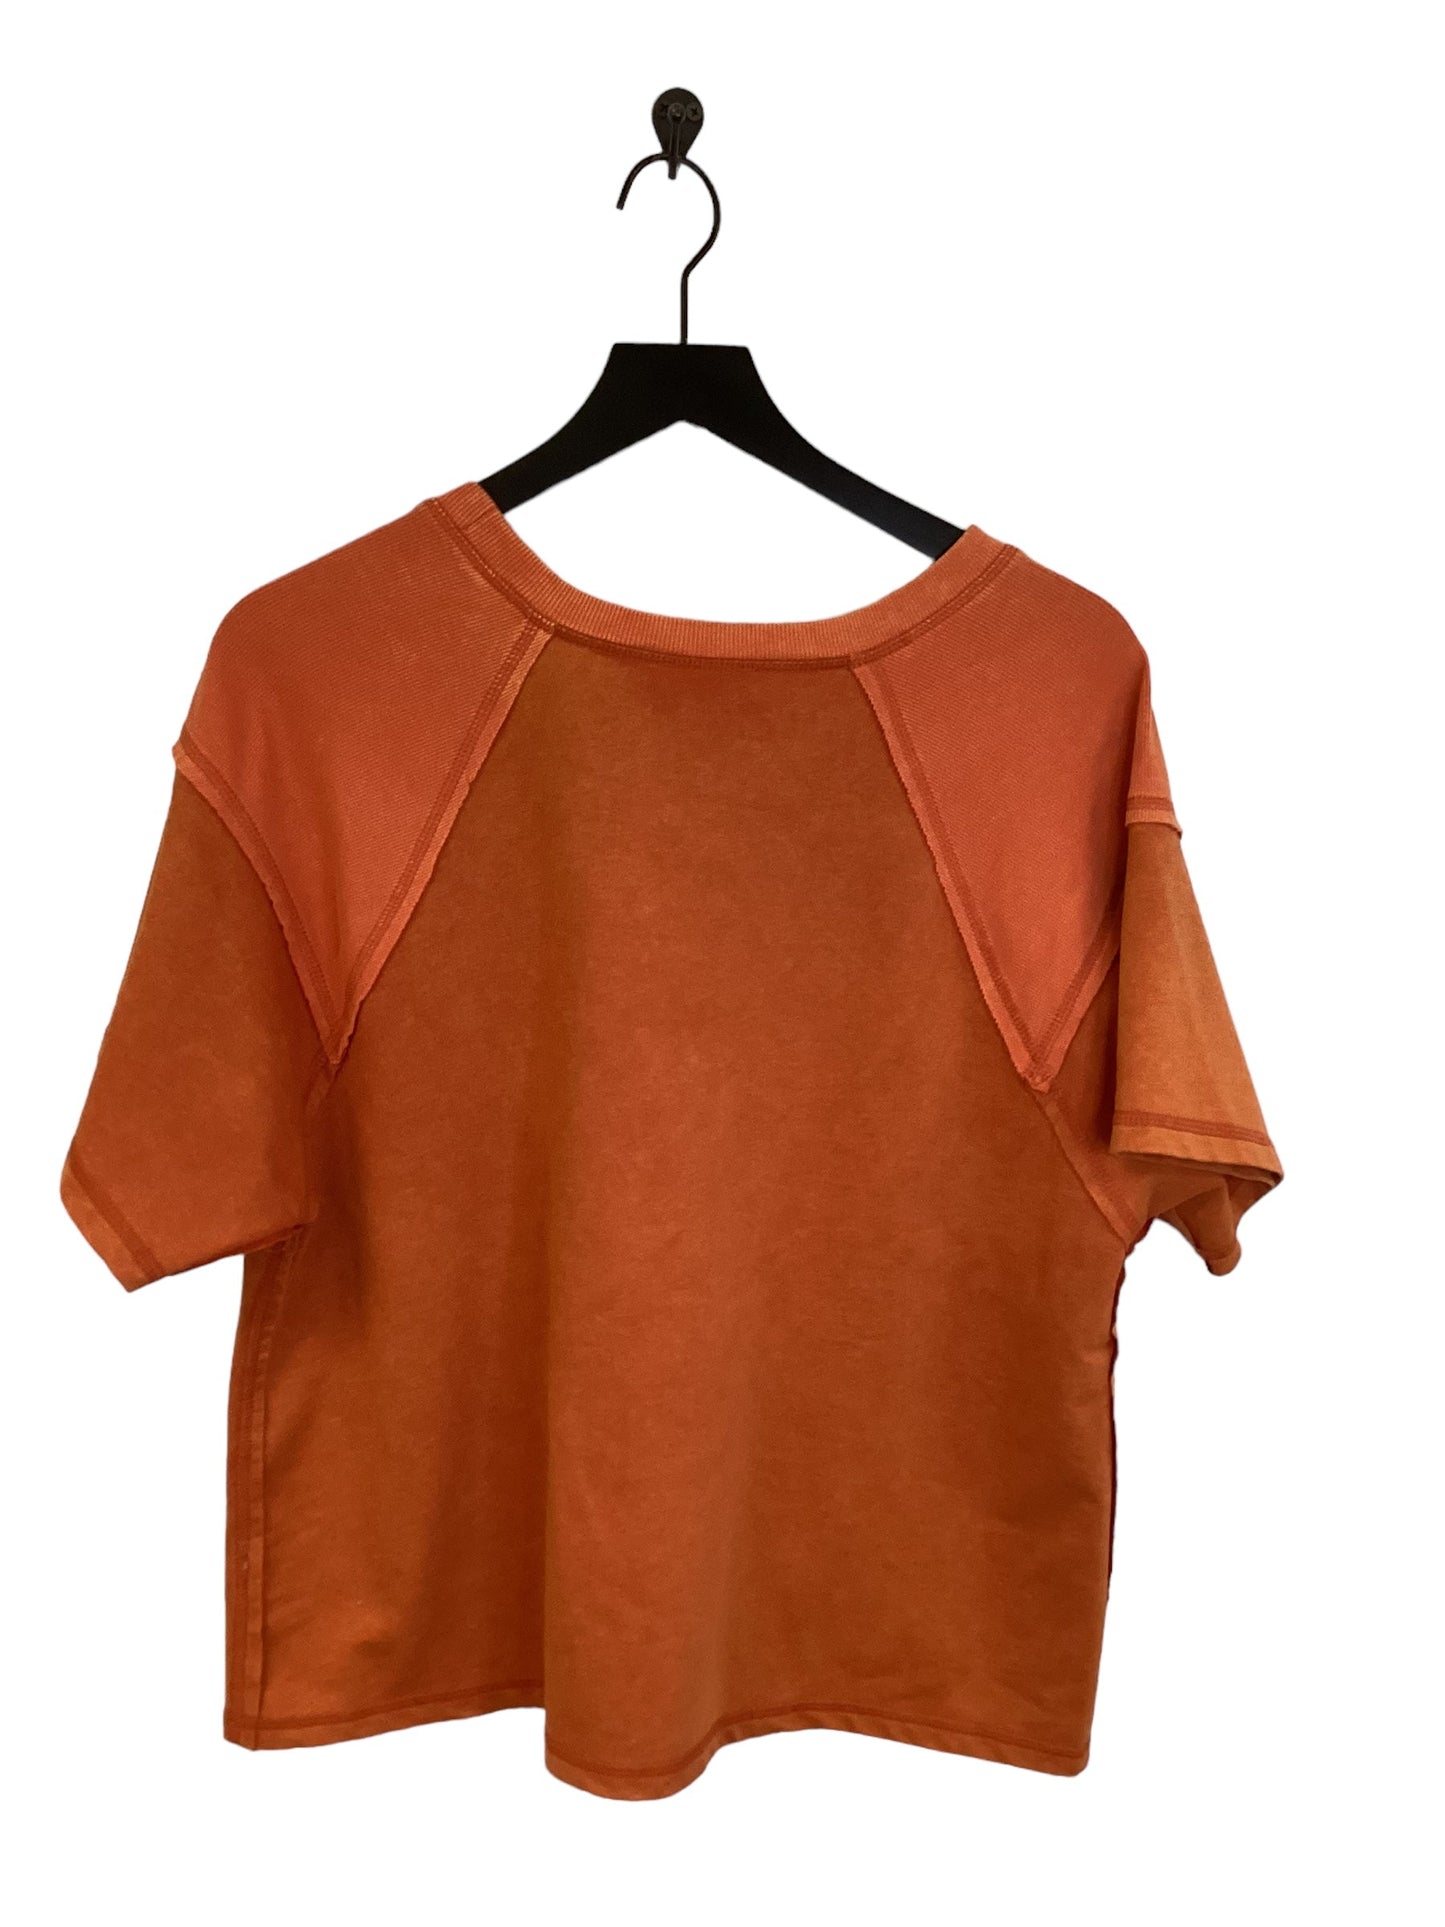 Top Short Sleeve By Hem & Thread  Size: M